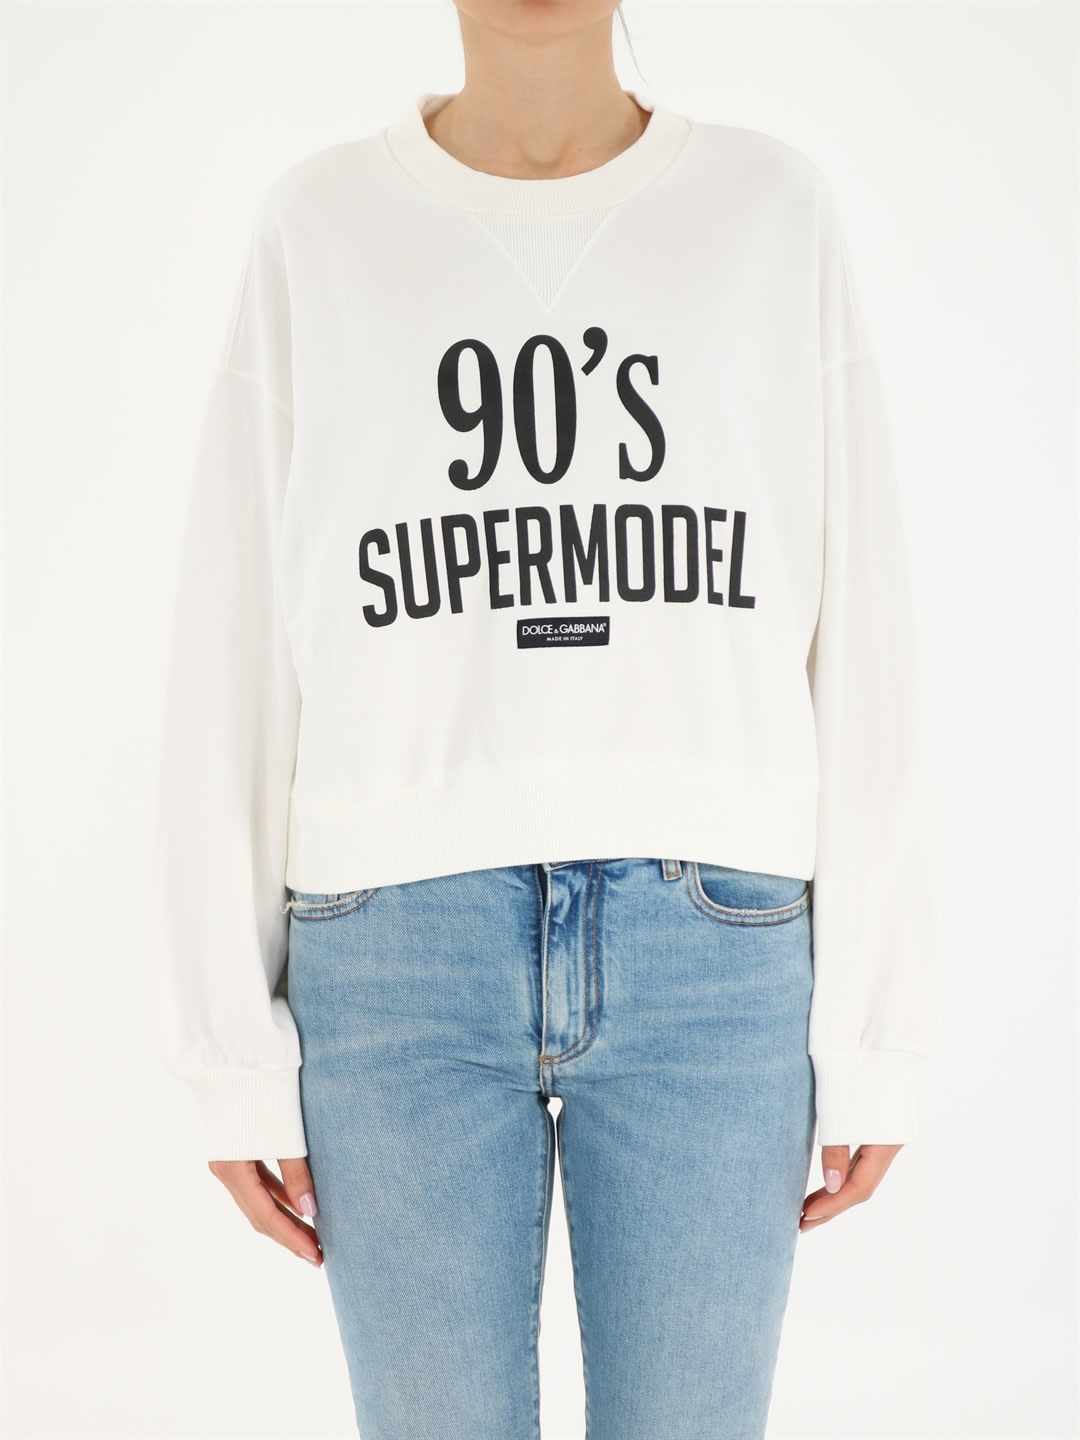 Dolce & Gabbana 90s Supermodel White Sweatshirt